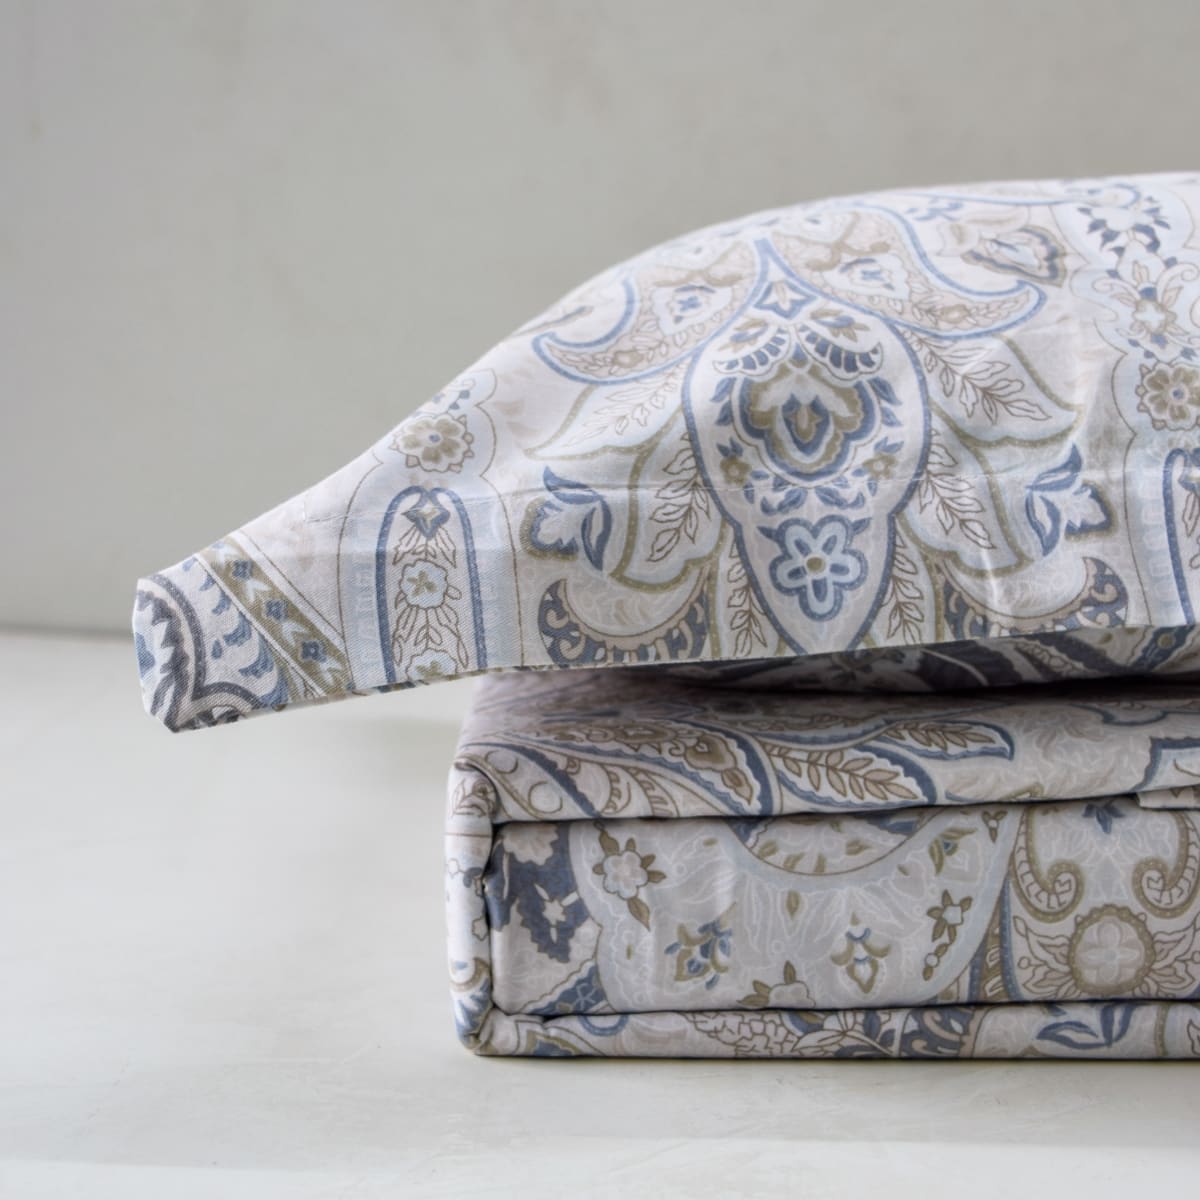 A Floral Medley Cotton Bed Sheet - Home Artisan